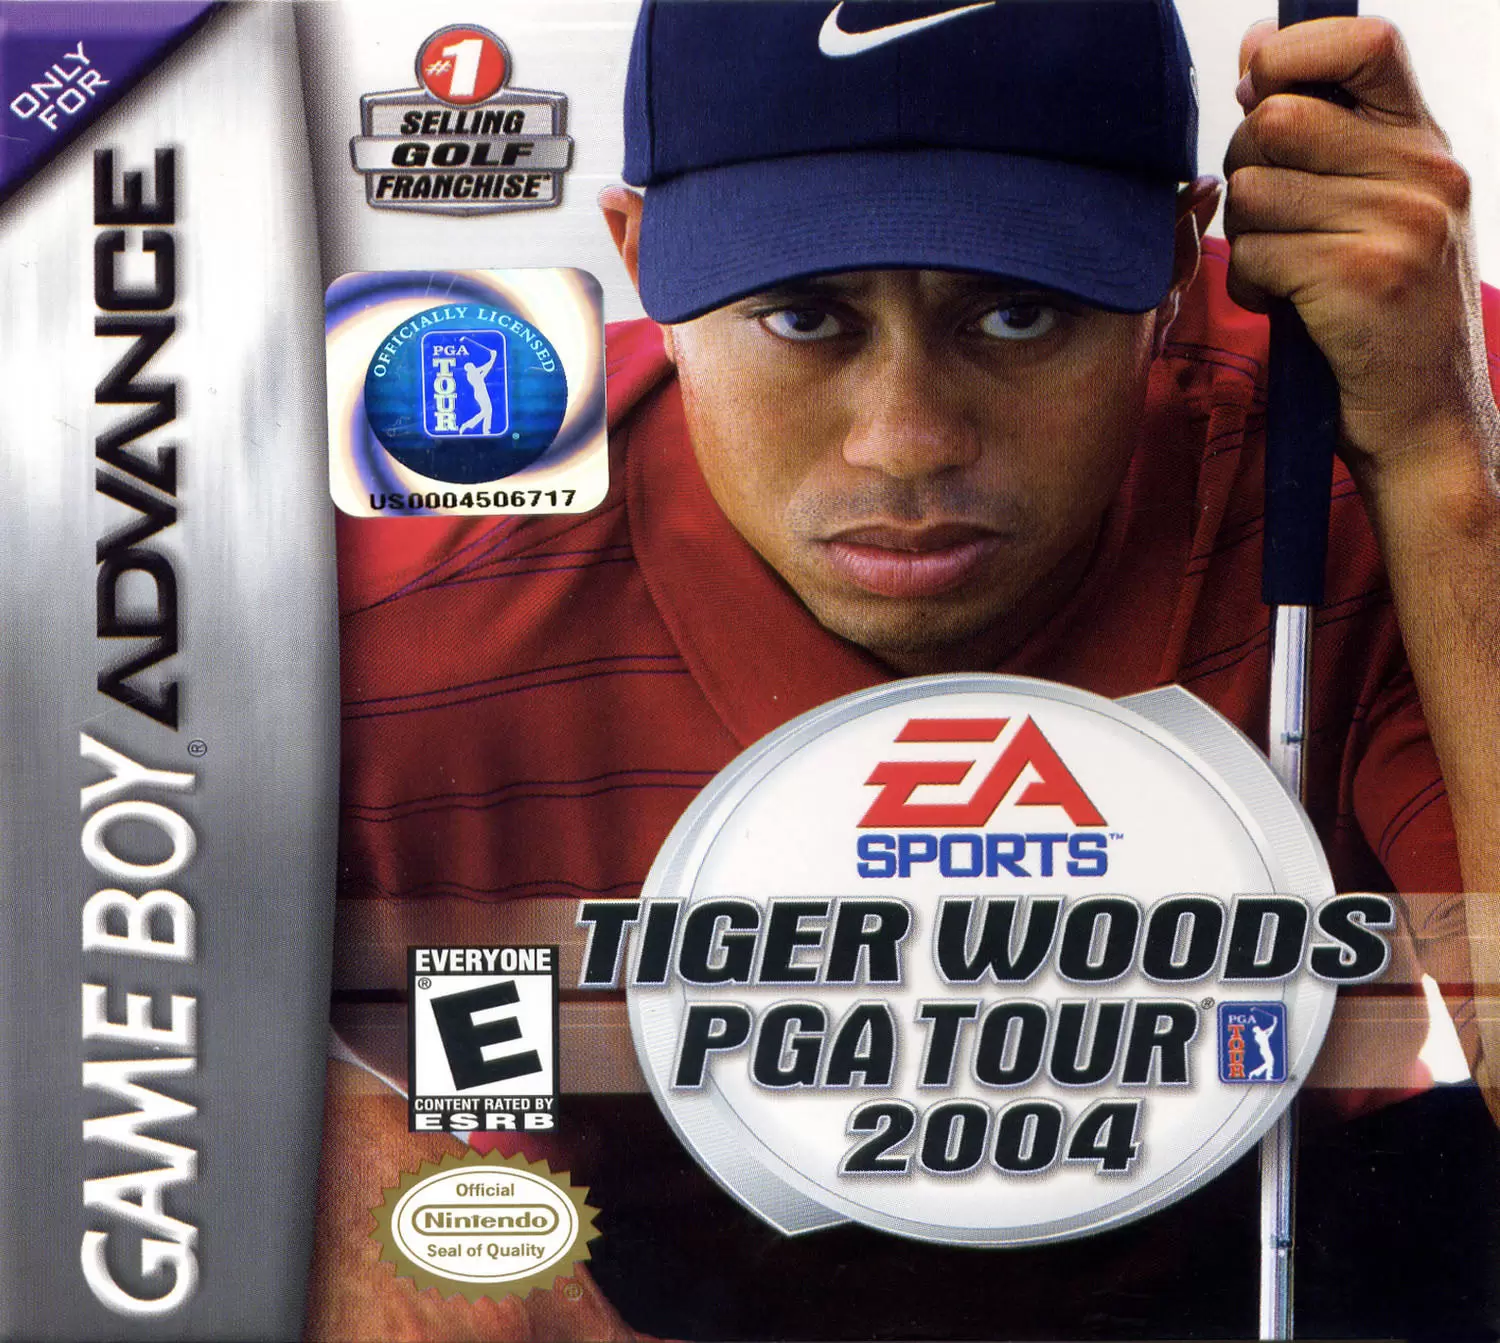 Game Boy Advance Games - Tiger Woods PGA Tour 2004